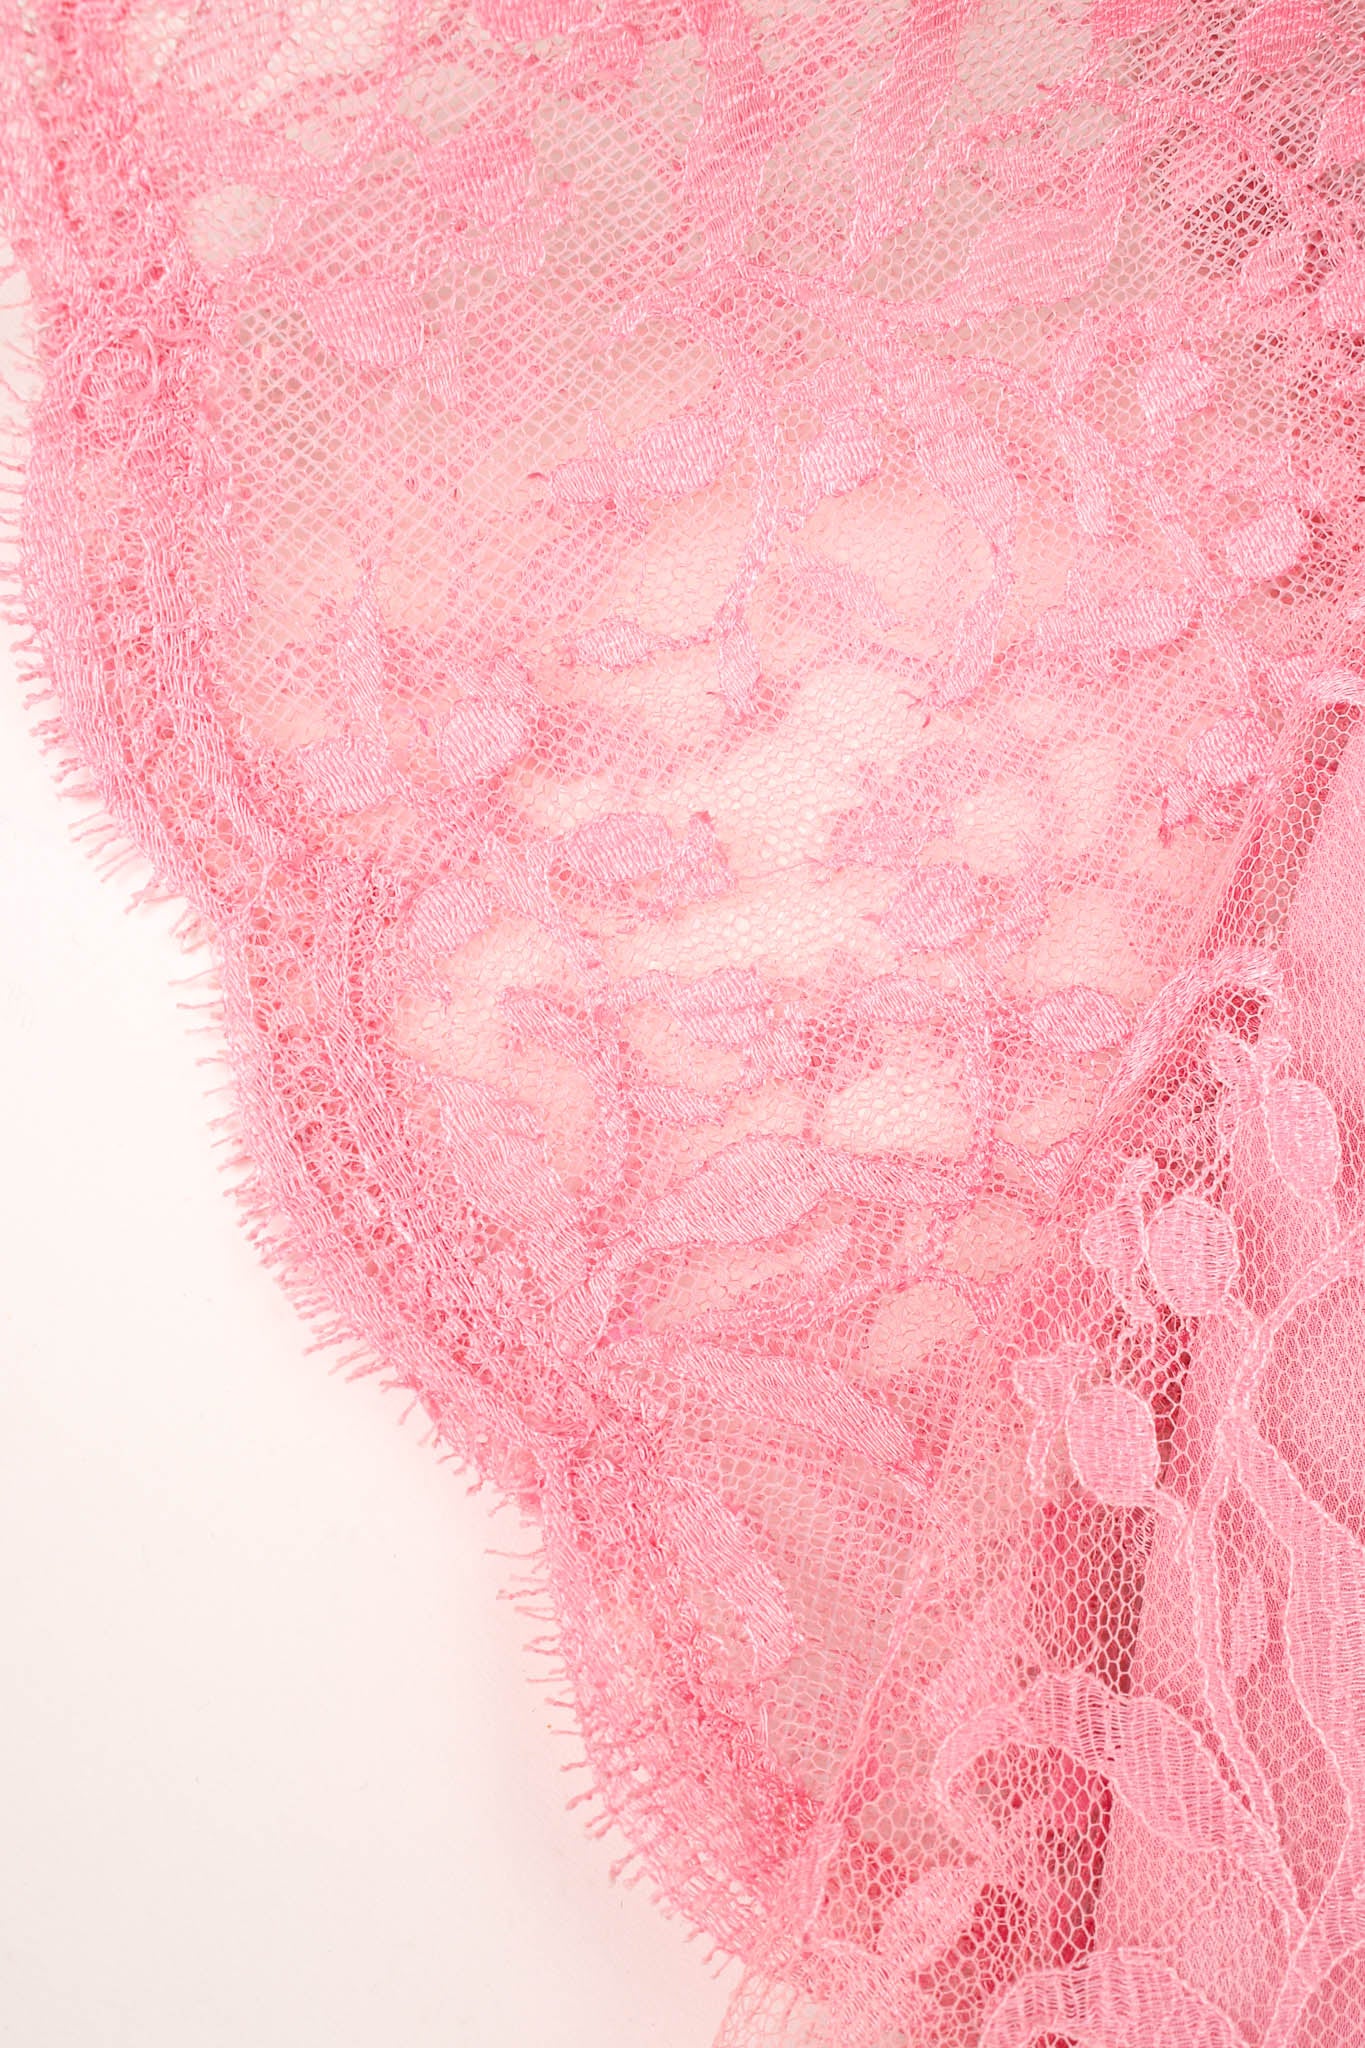 Gorgeous Haute Couture Gown by Pierre Cardin 1987 Fabric Details Close-up. @recesla